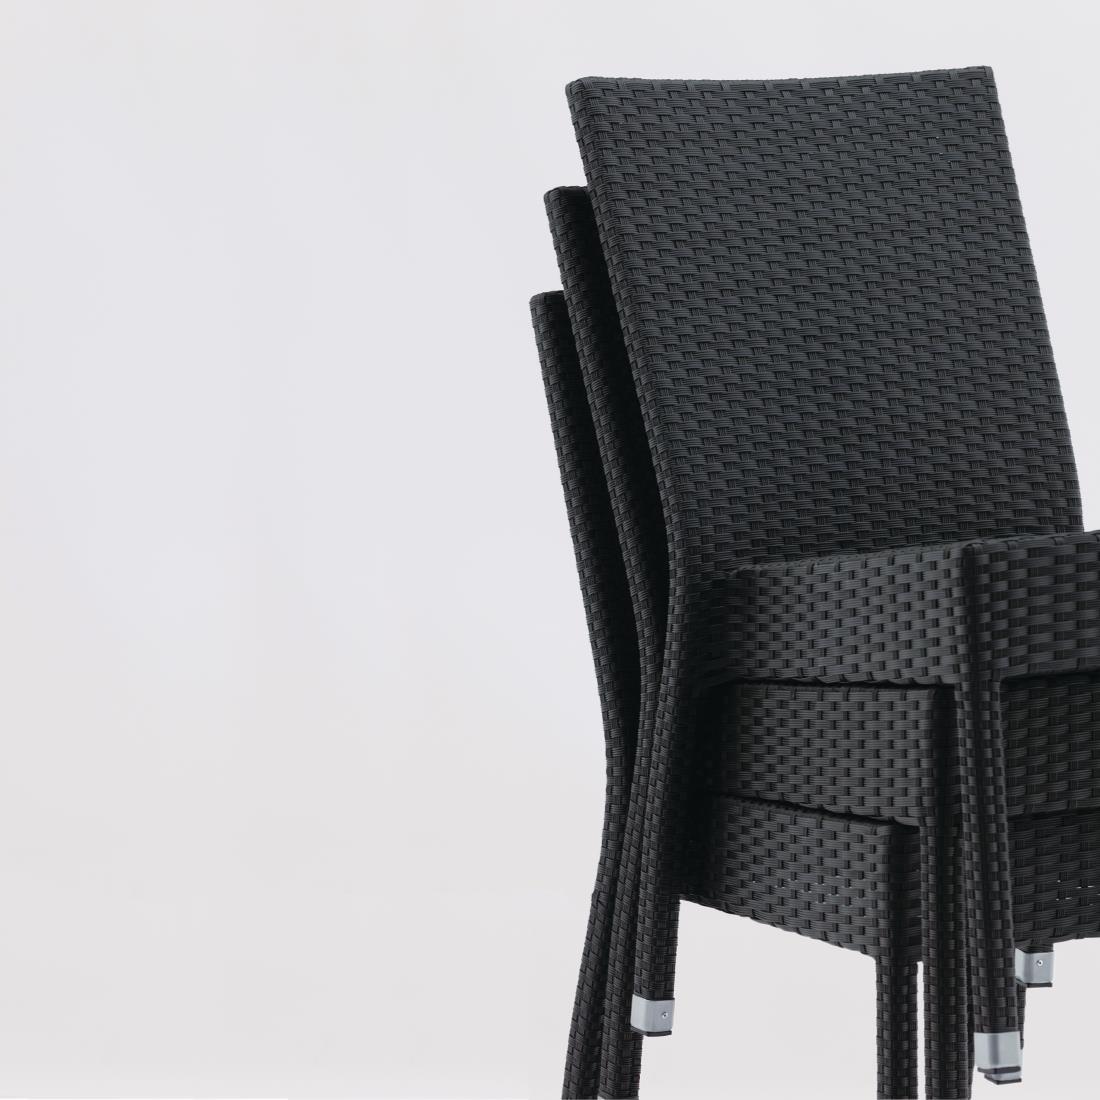 Bolero PE Wicker Side Chairs Charcoal (Pack of 4) - CF159  - 7